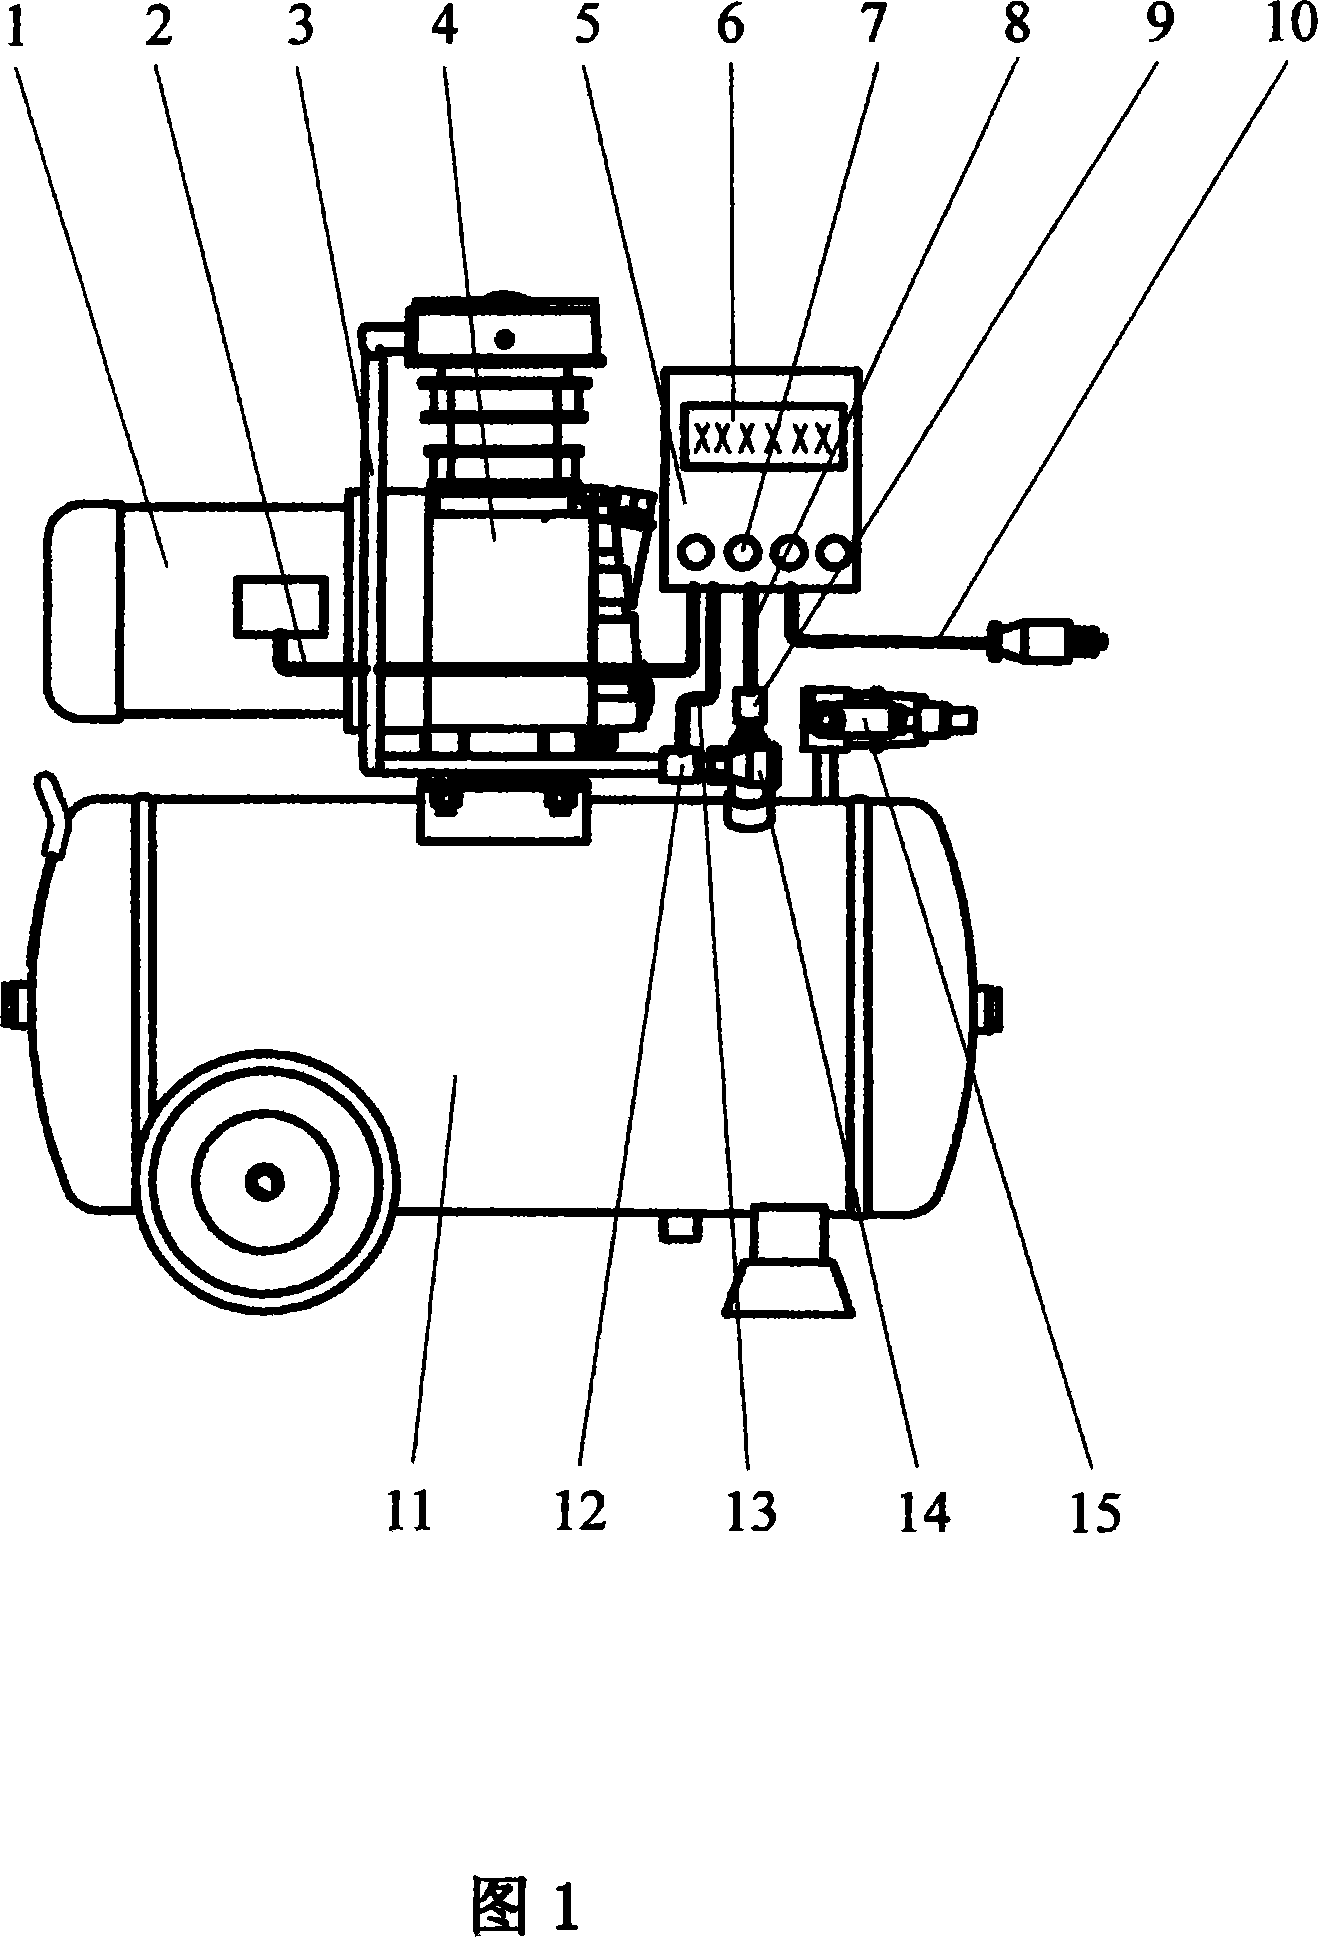 Automatic speed regulation air compressor